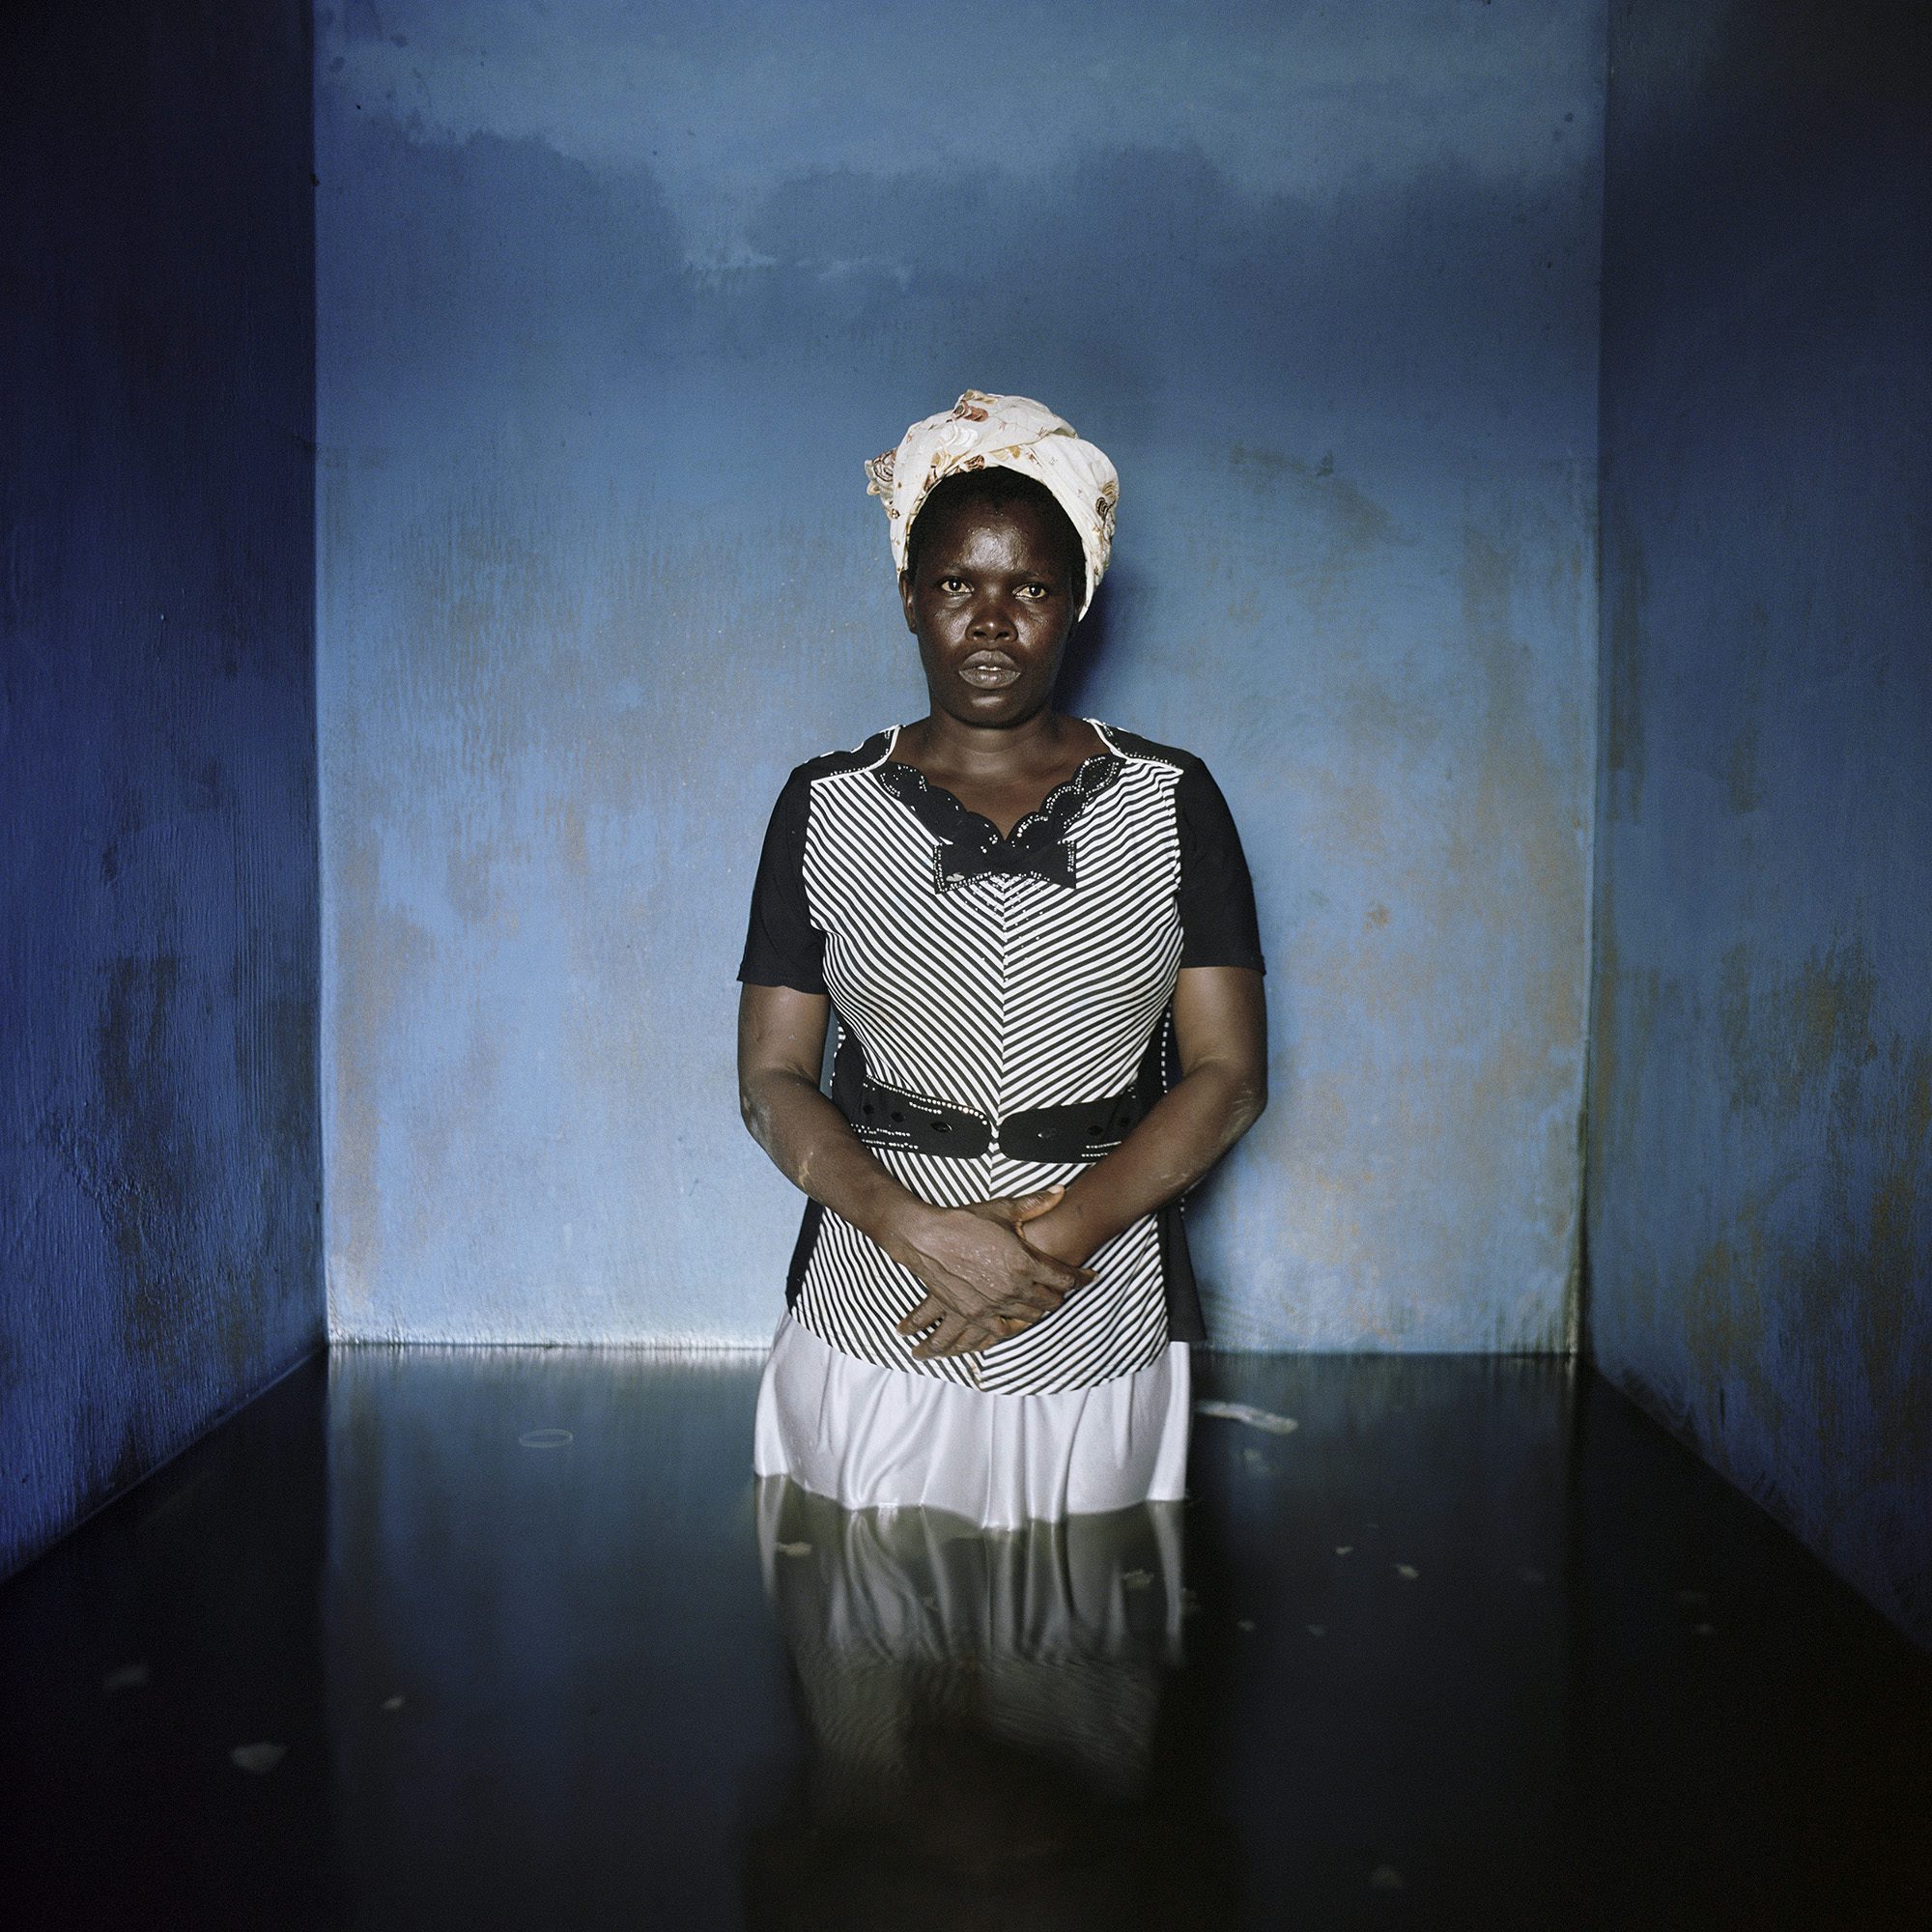 Florence Abraham, Igbogene, Bayelsa State, Nigeria, November 2012. From the series Drowning World © Gideon Mendel